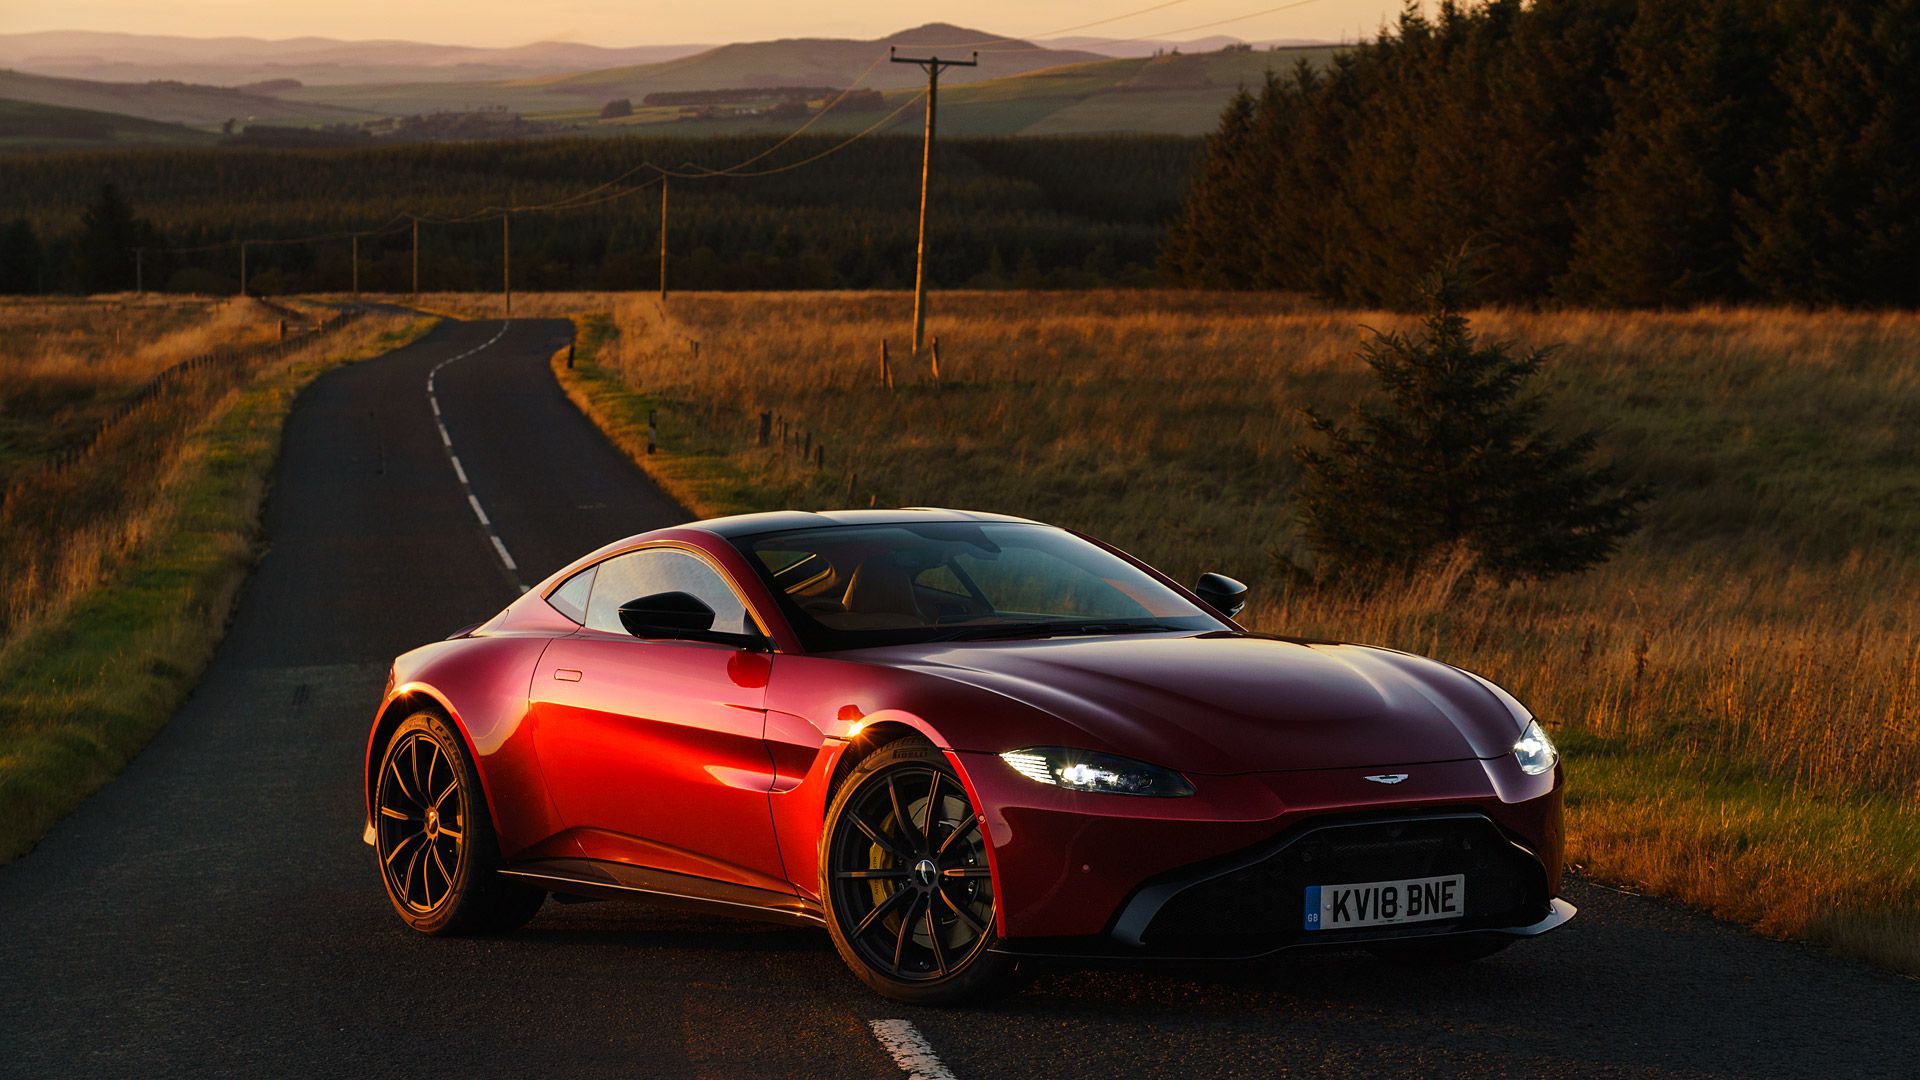 Fondos de Aston Martin Vantage 2019 e imágenes HD - WSupercars